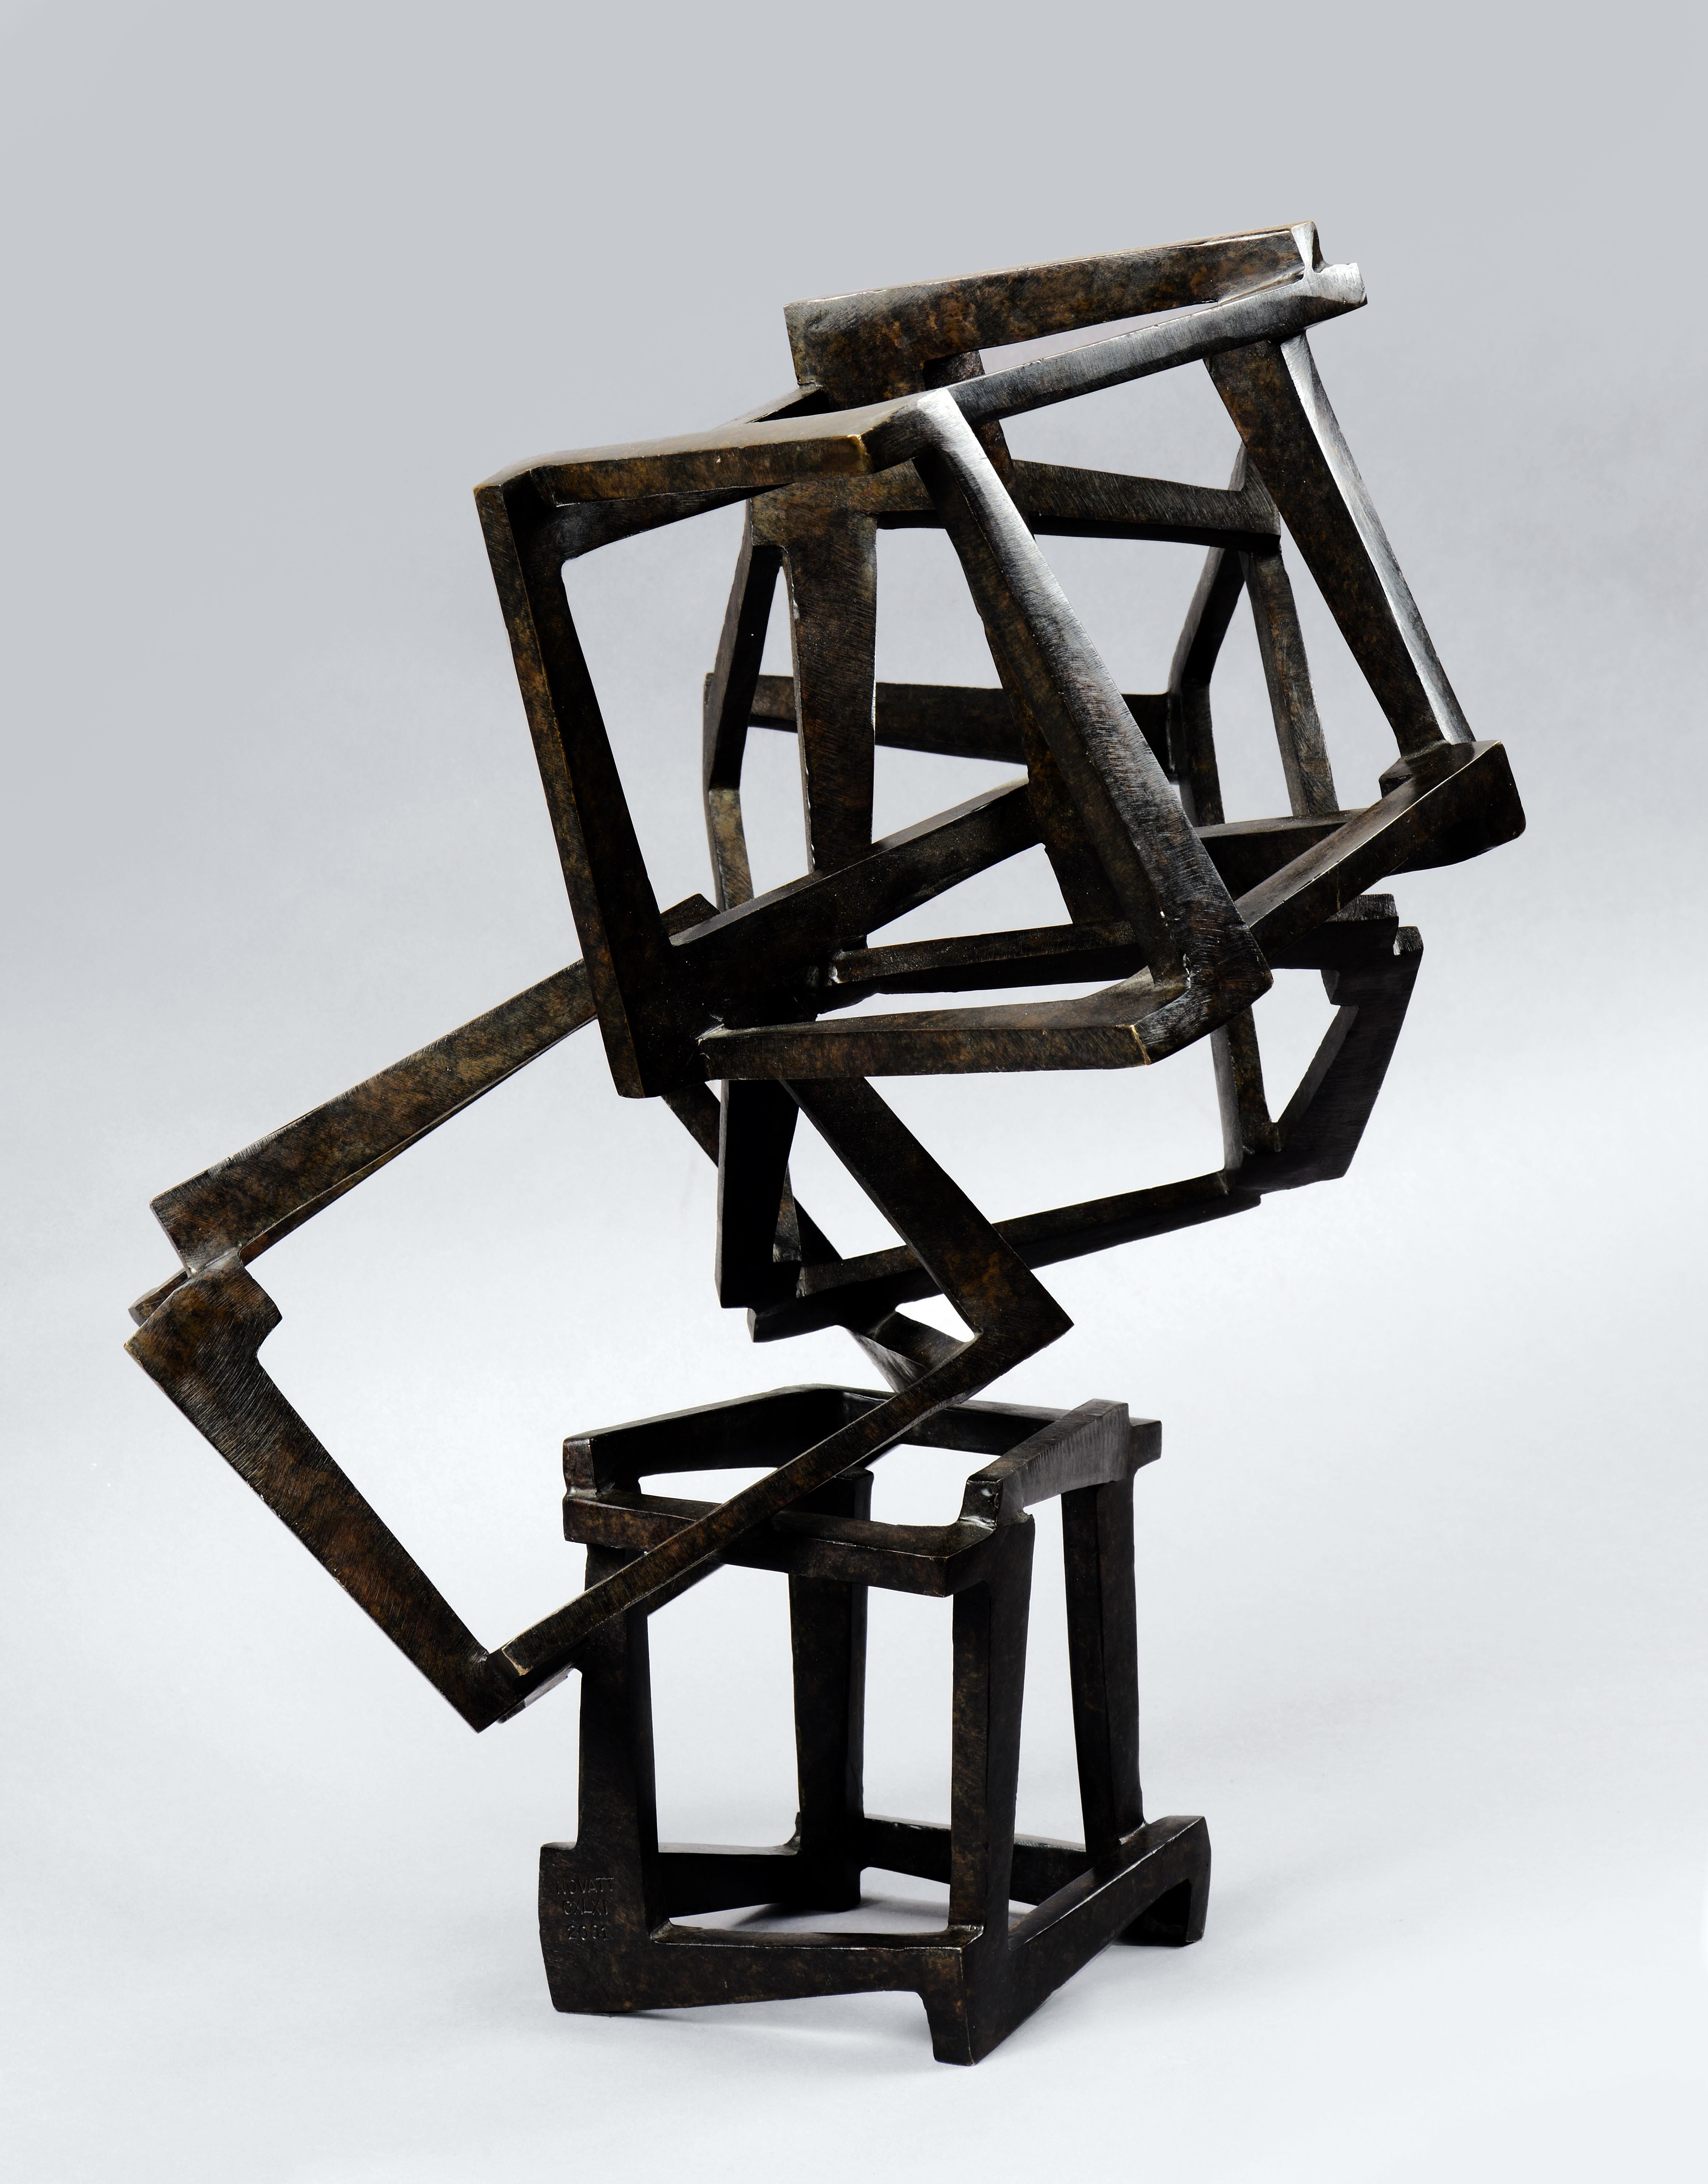 CXLXI - Sculpture by Jedd Novatt